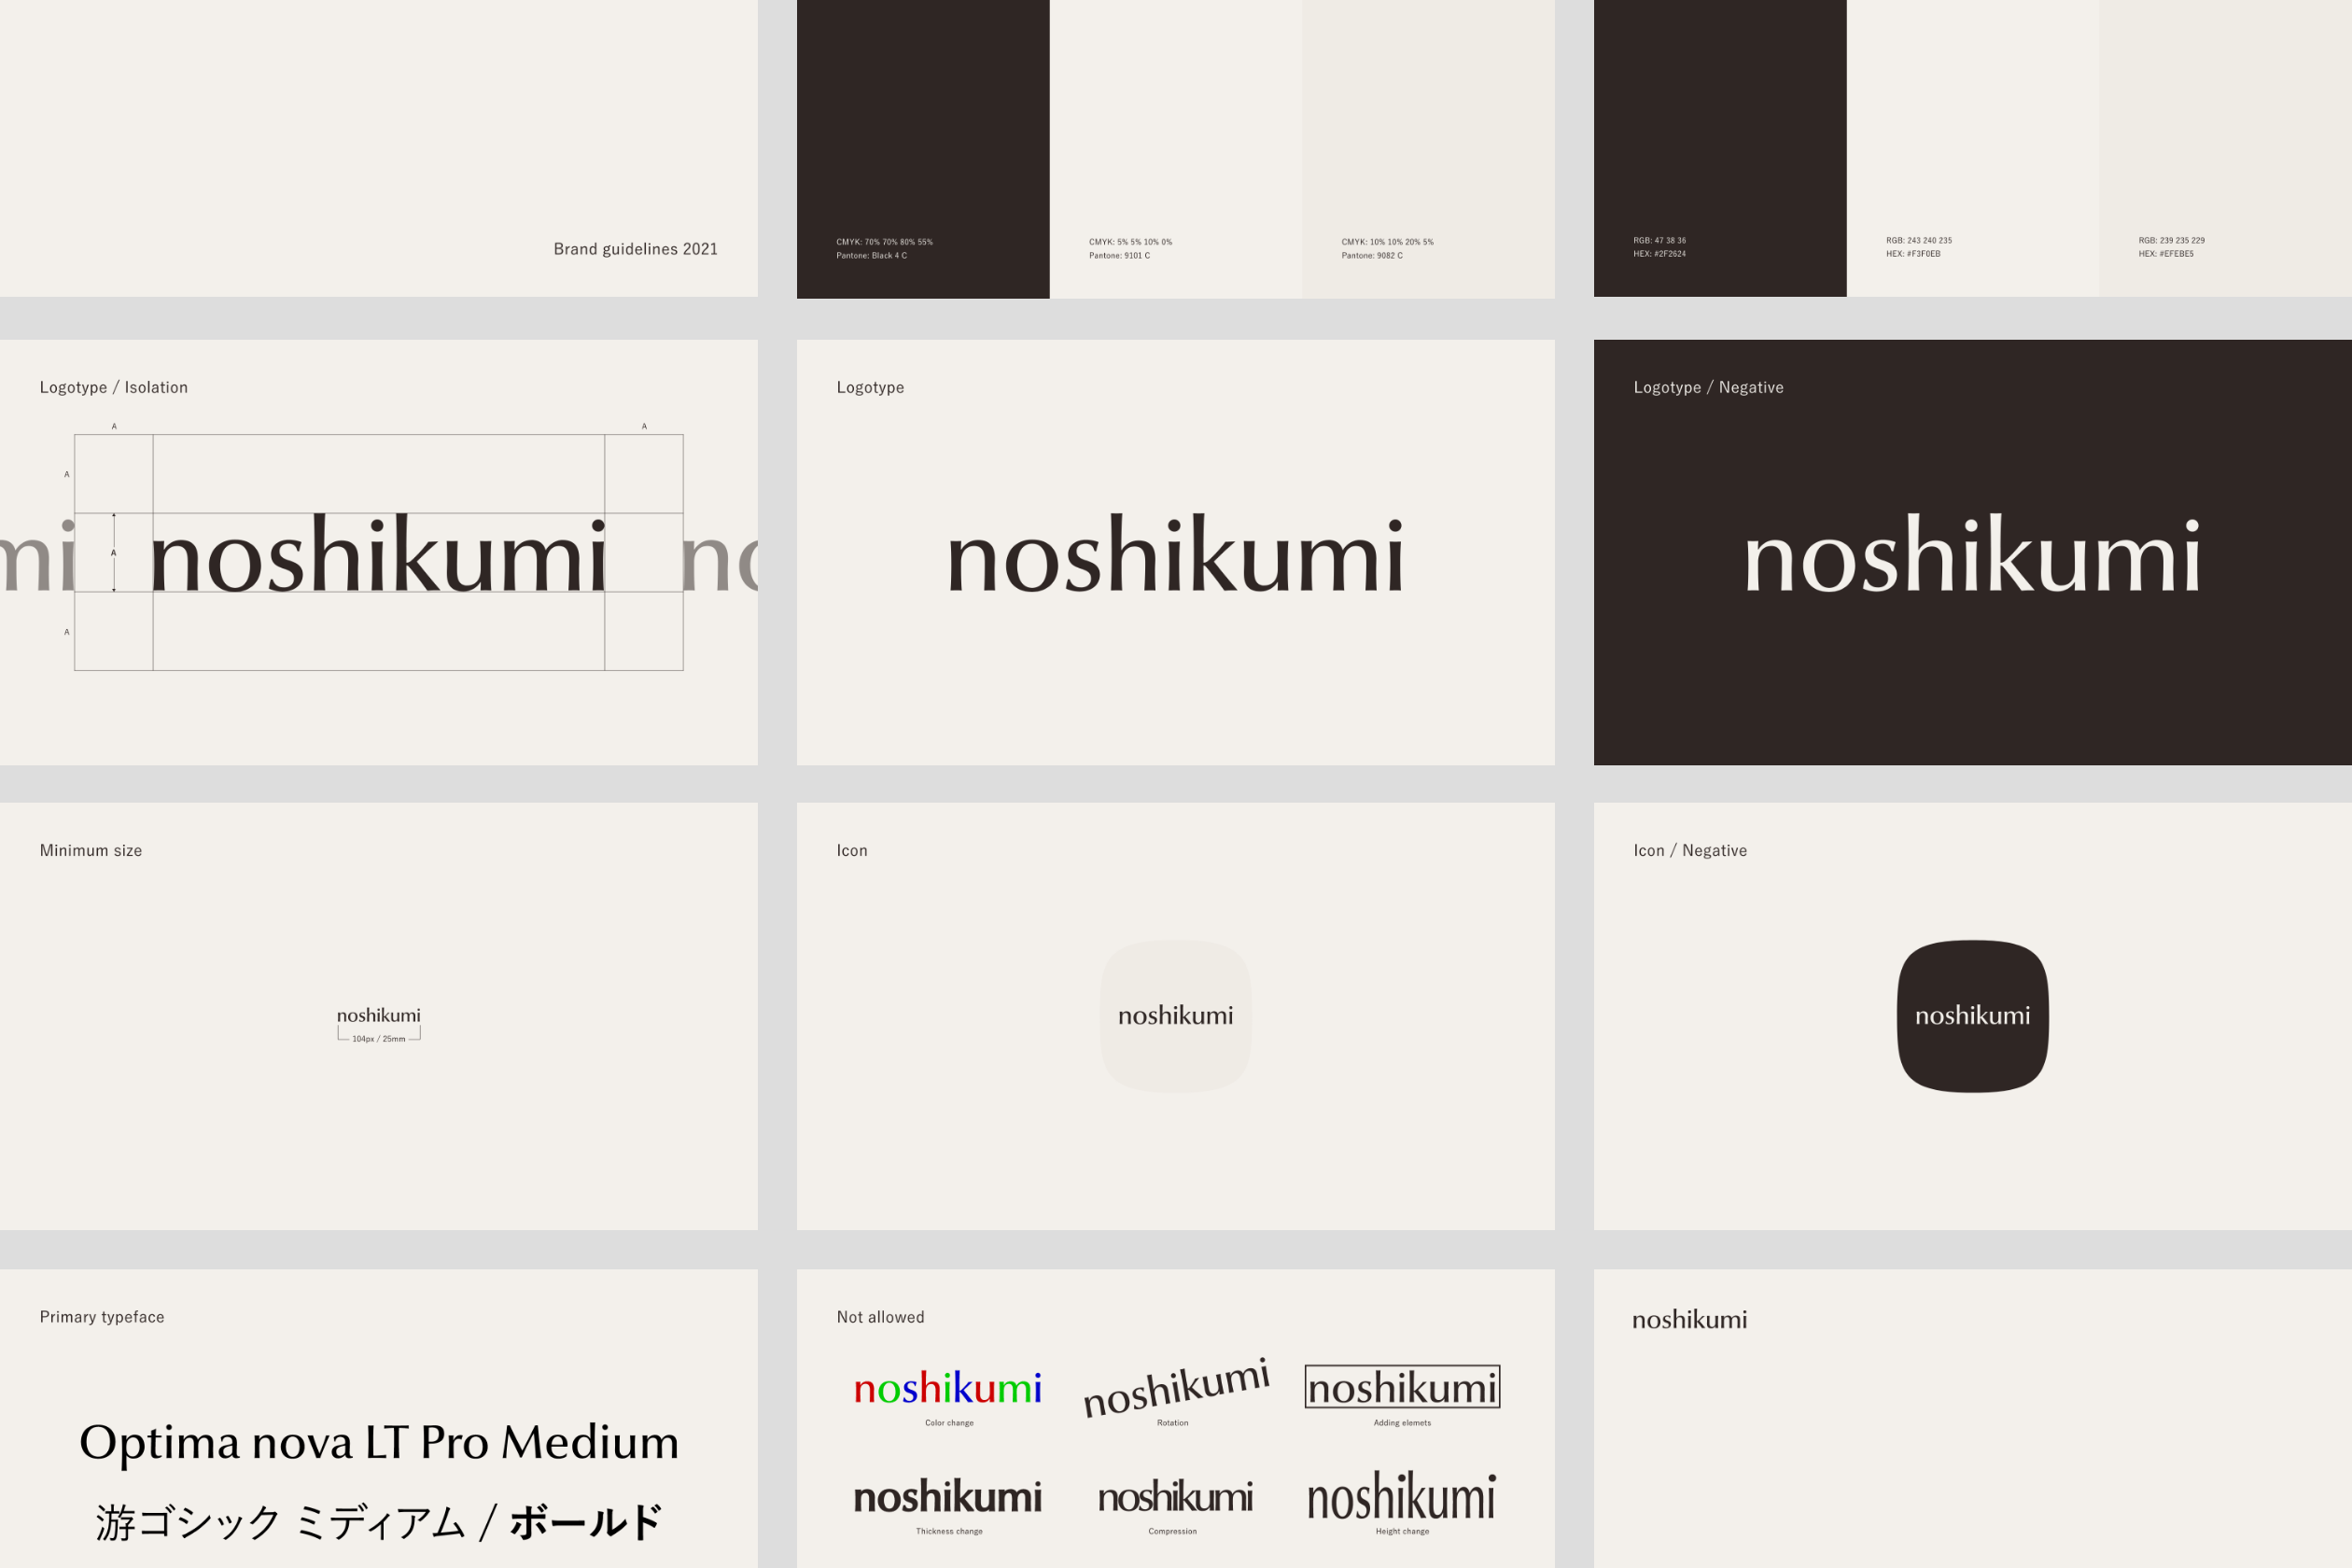 「noshikumi」のブランドガイドライン画像